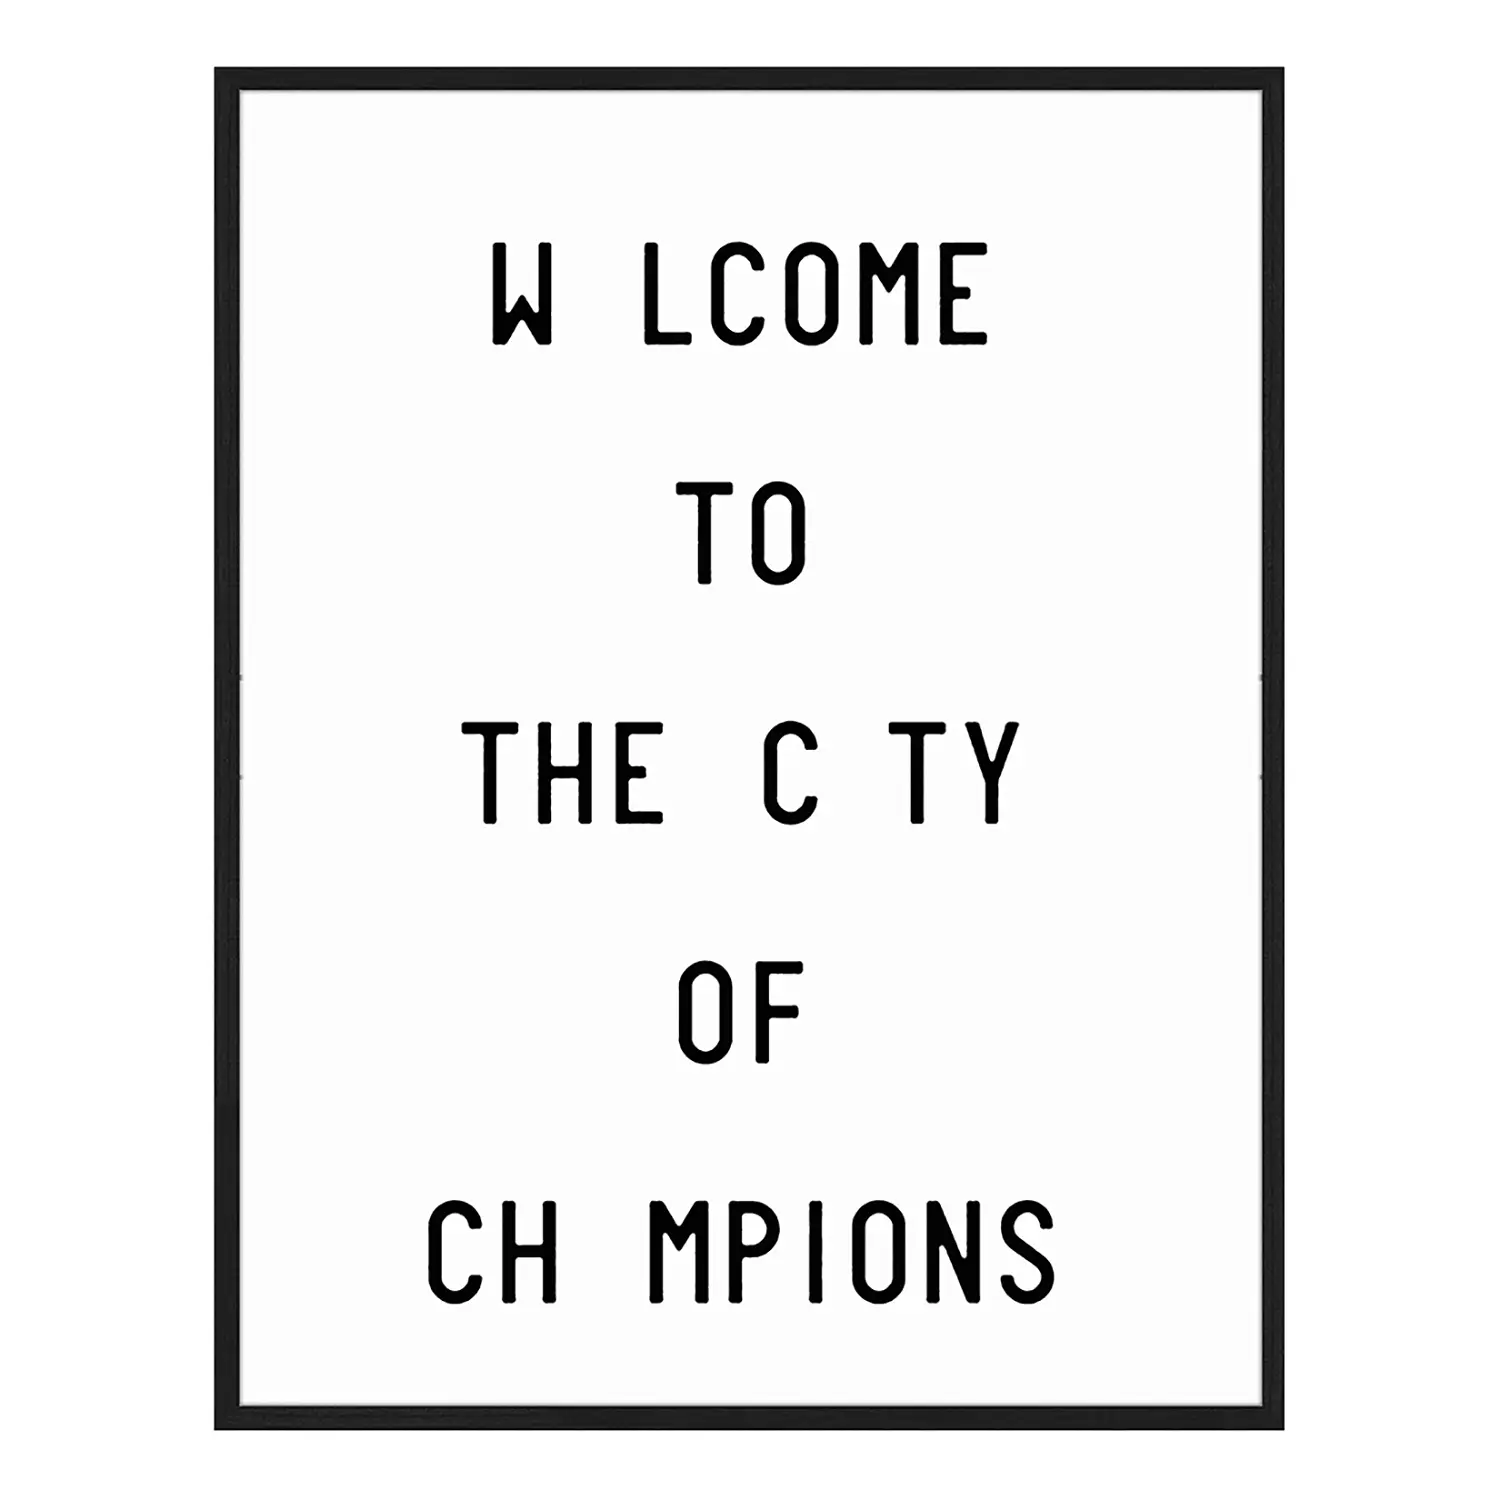 Bild City of champions